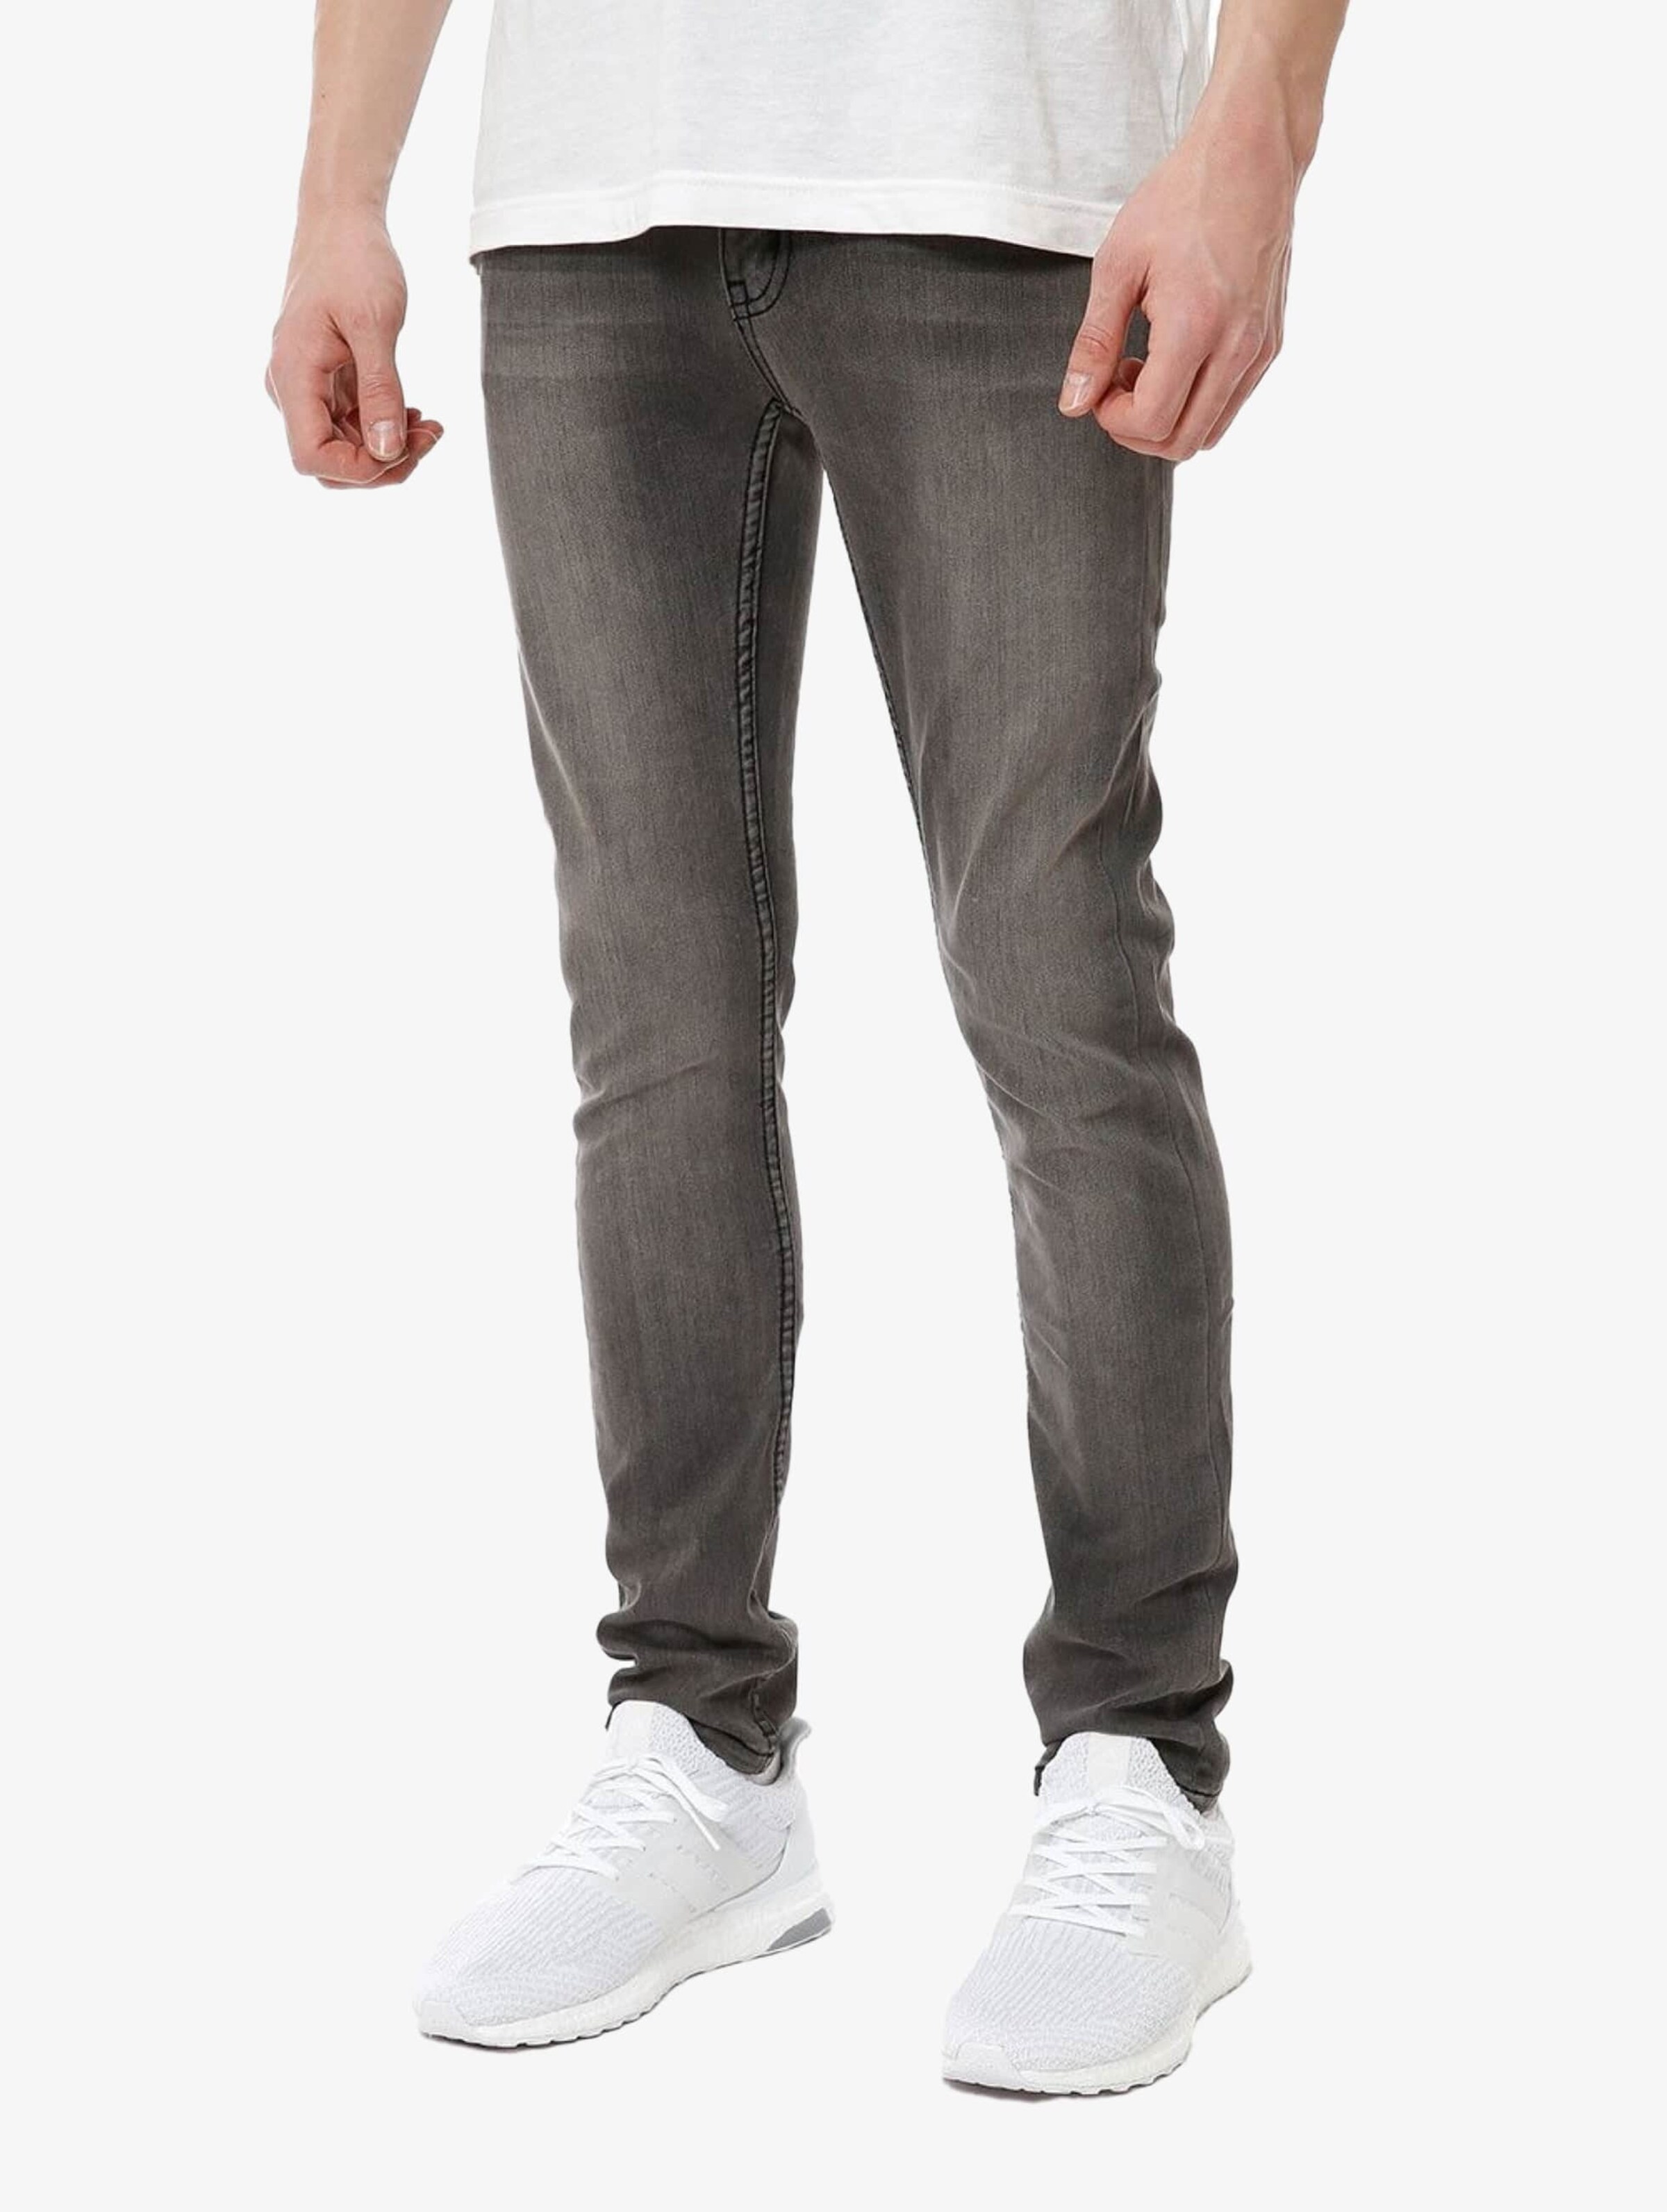 CHEAP MONDAY Tight Dark Clean Wash Men W32 L32 Slim Fit Skinny Jeans Denim  Pants | eBay